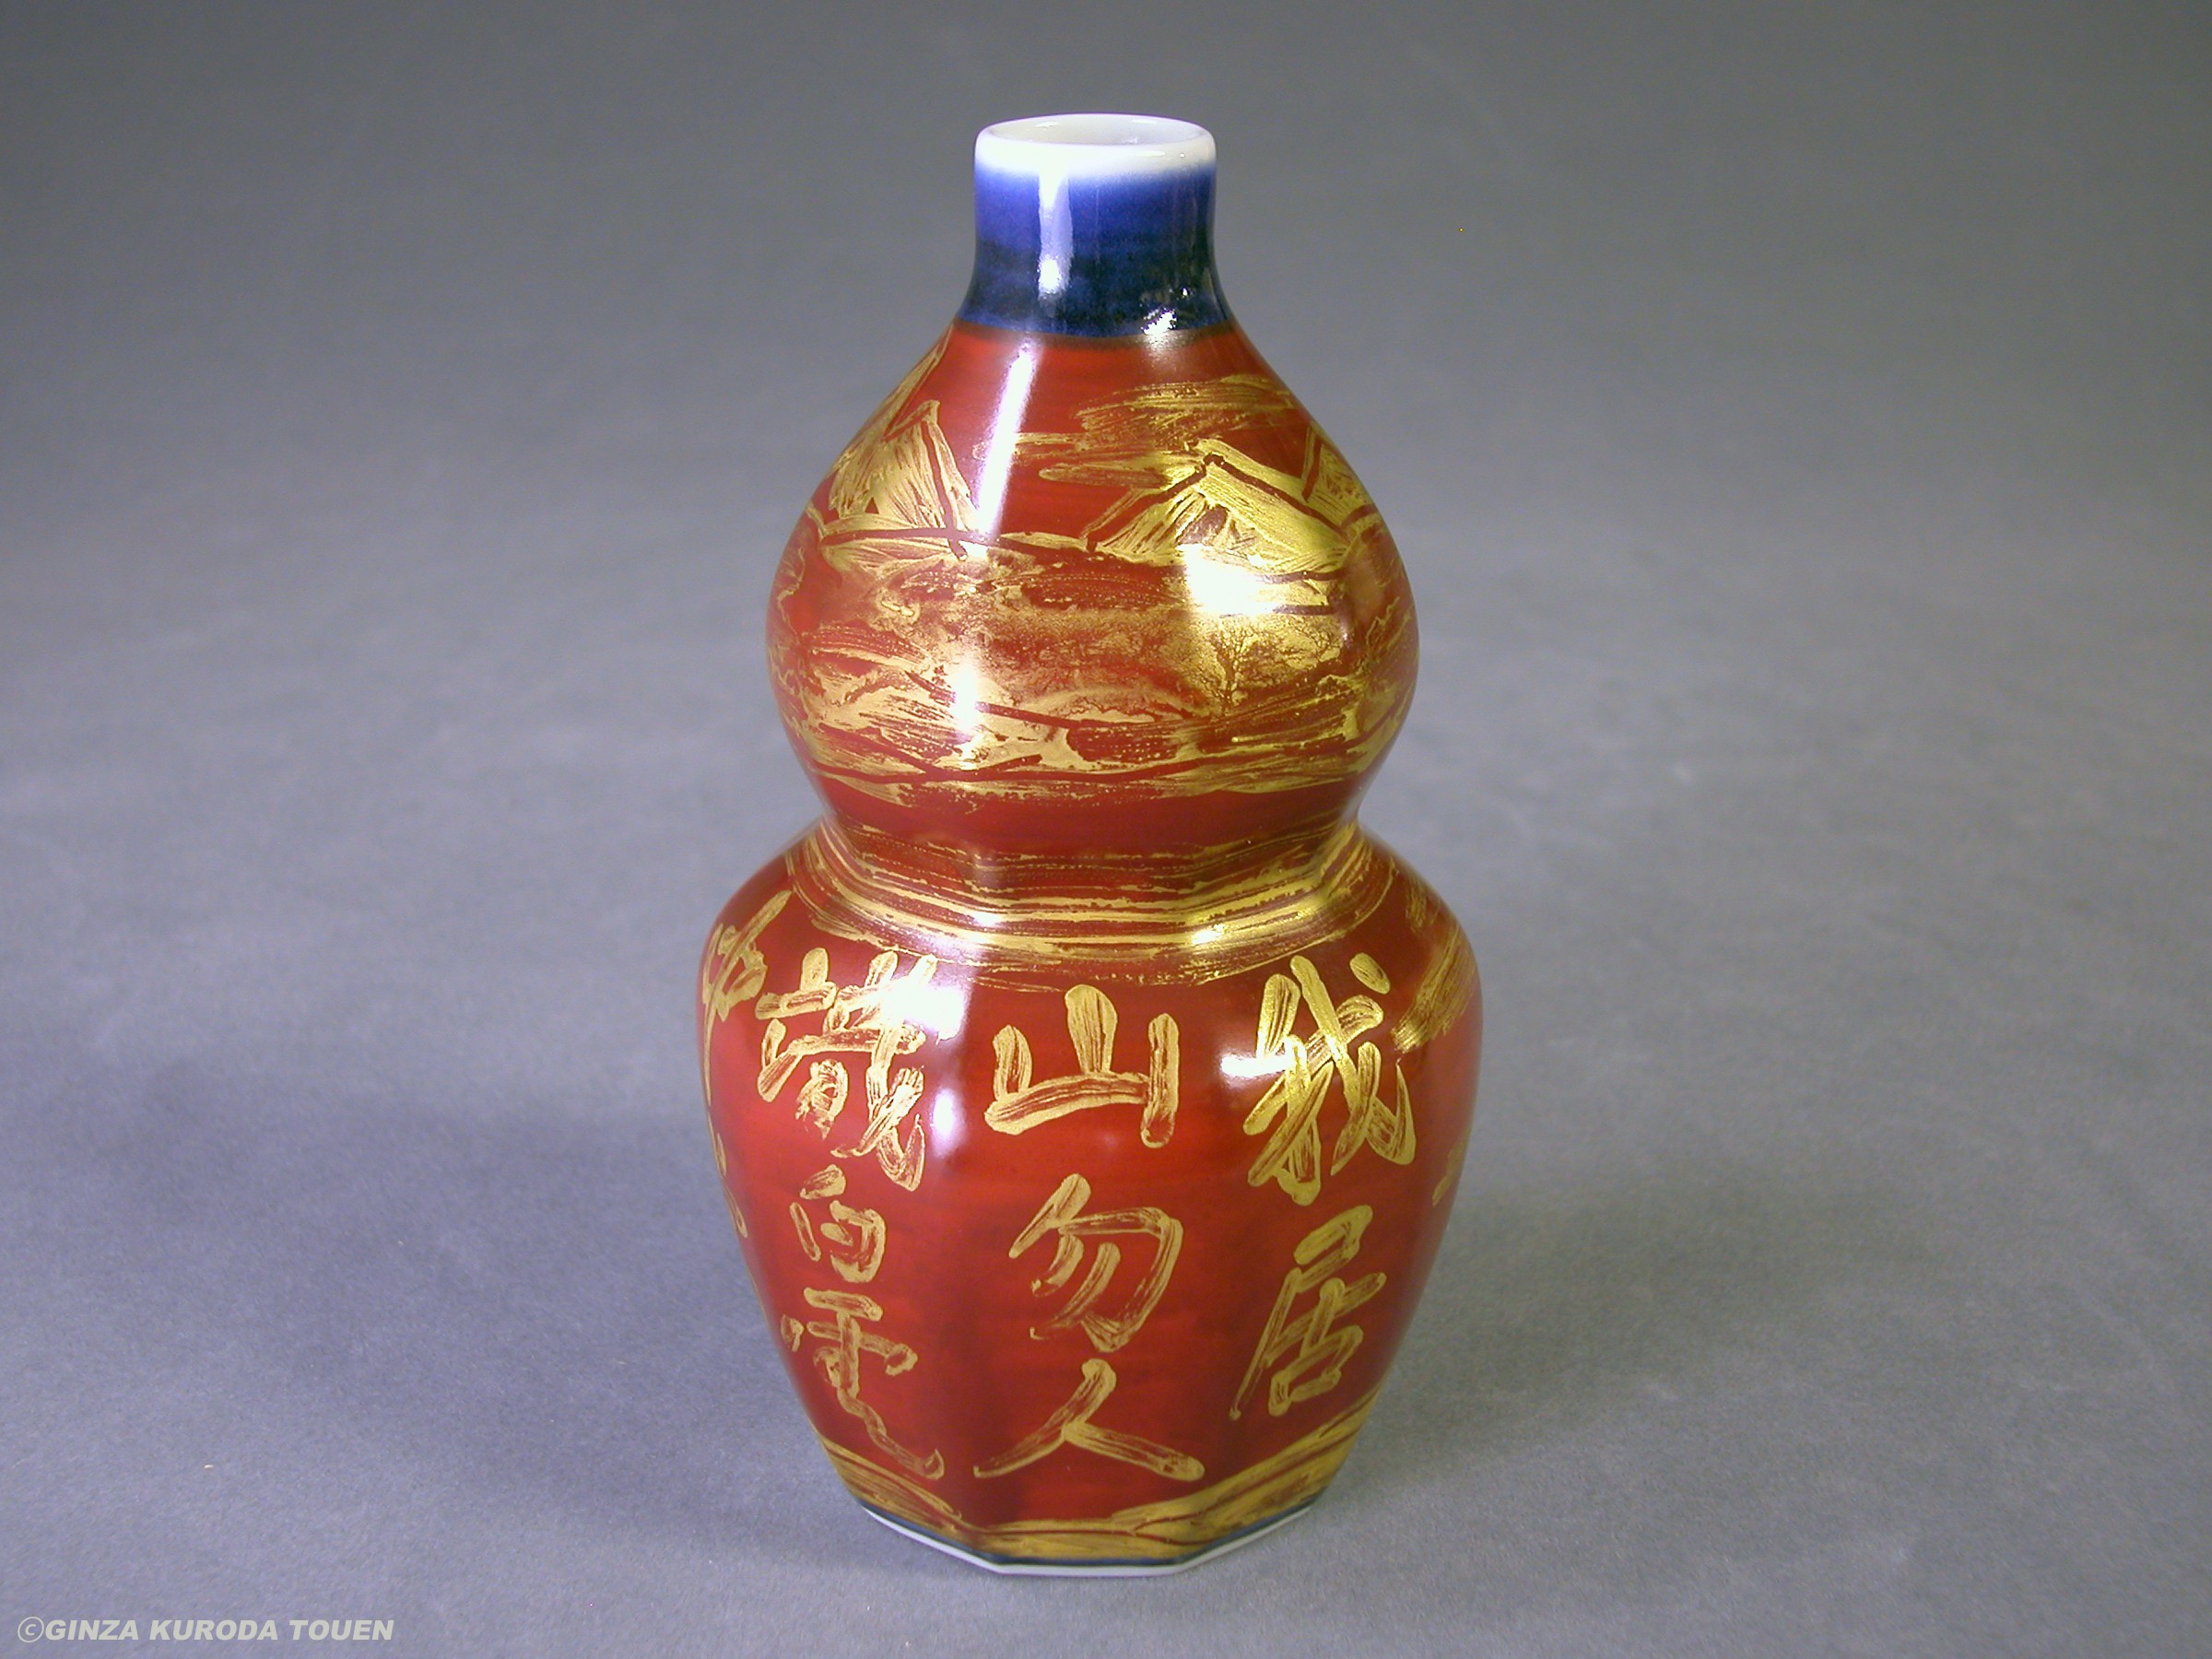 Yuzo Kondo: Sake bottle, Red and gold painting, theme of long life